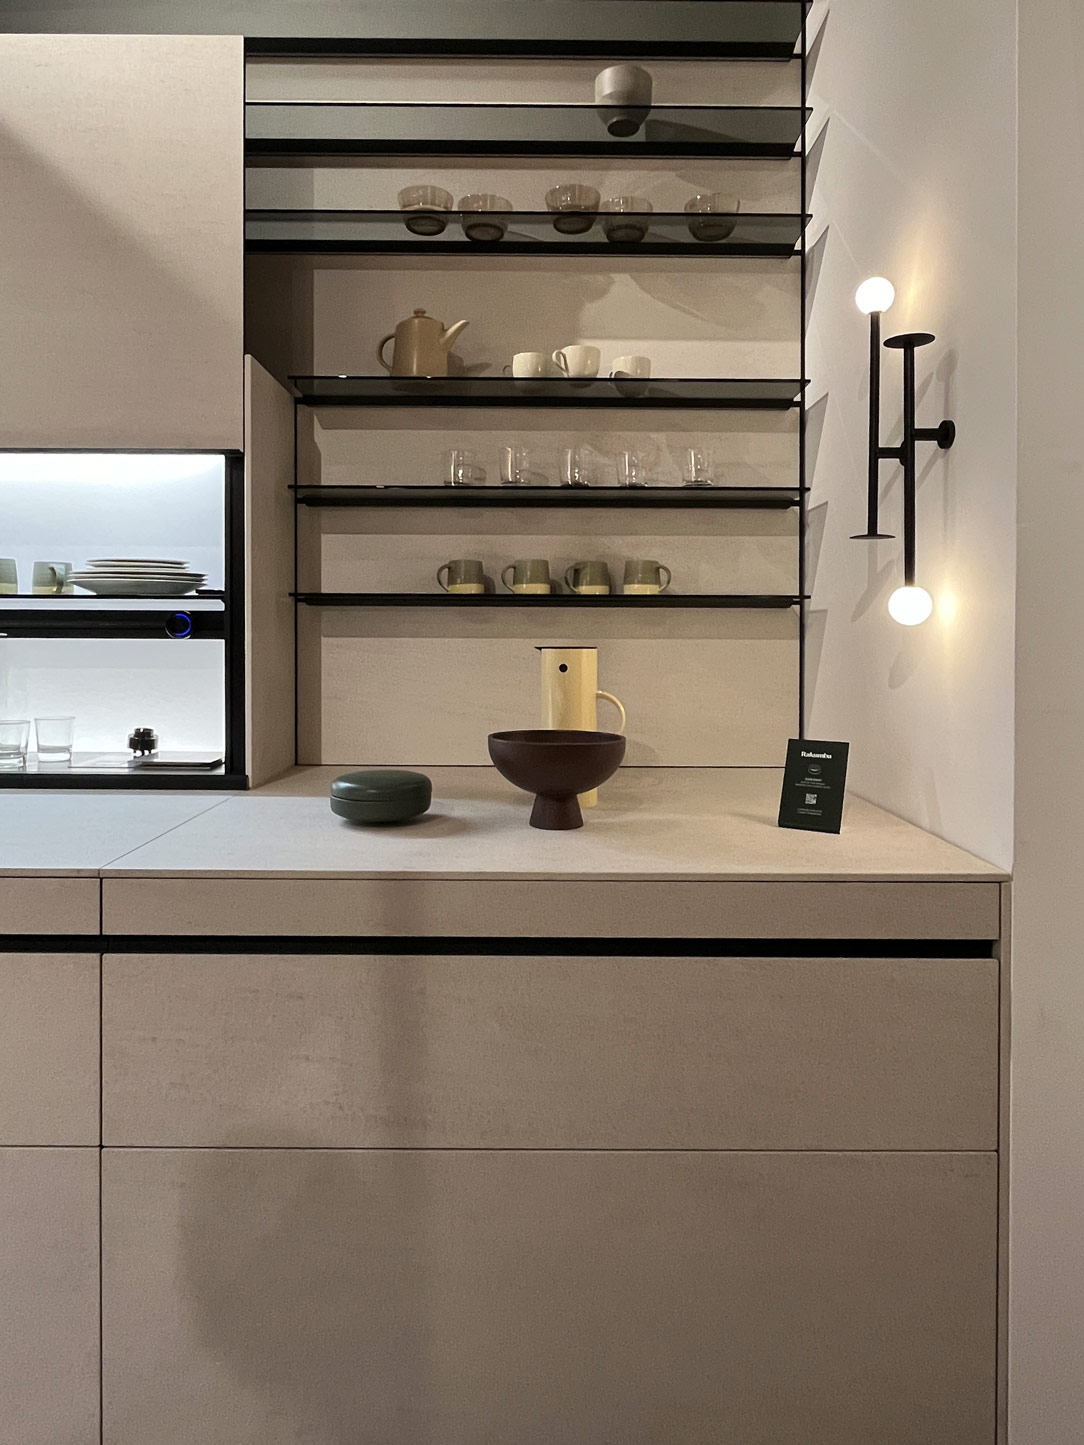 kitchen shelves displayed